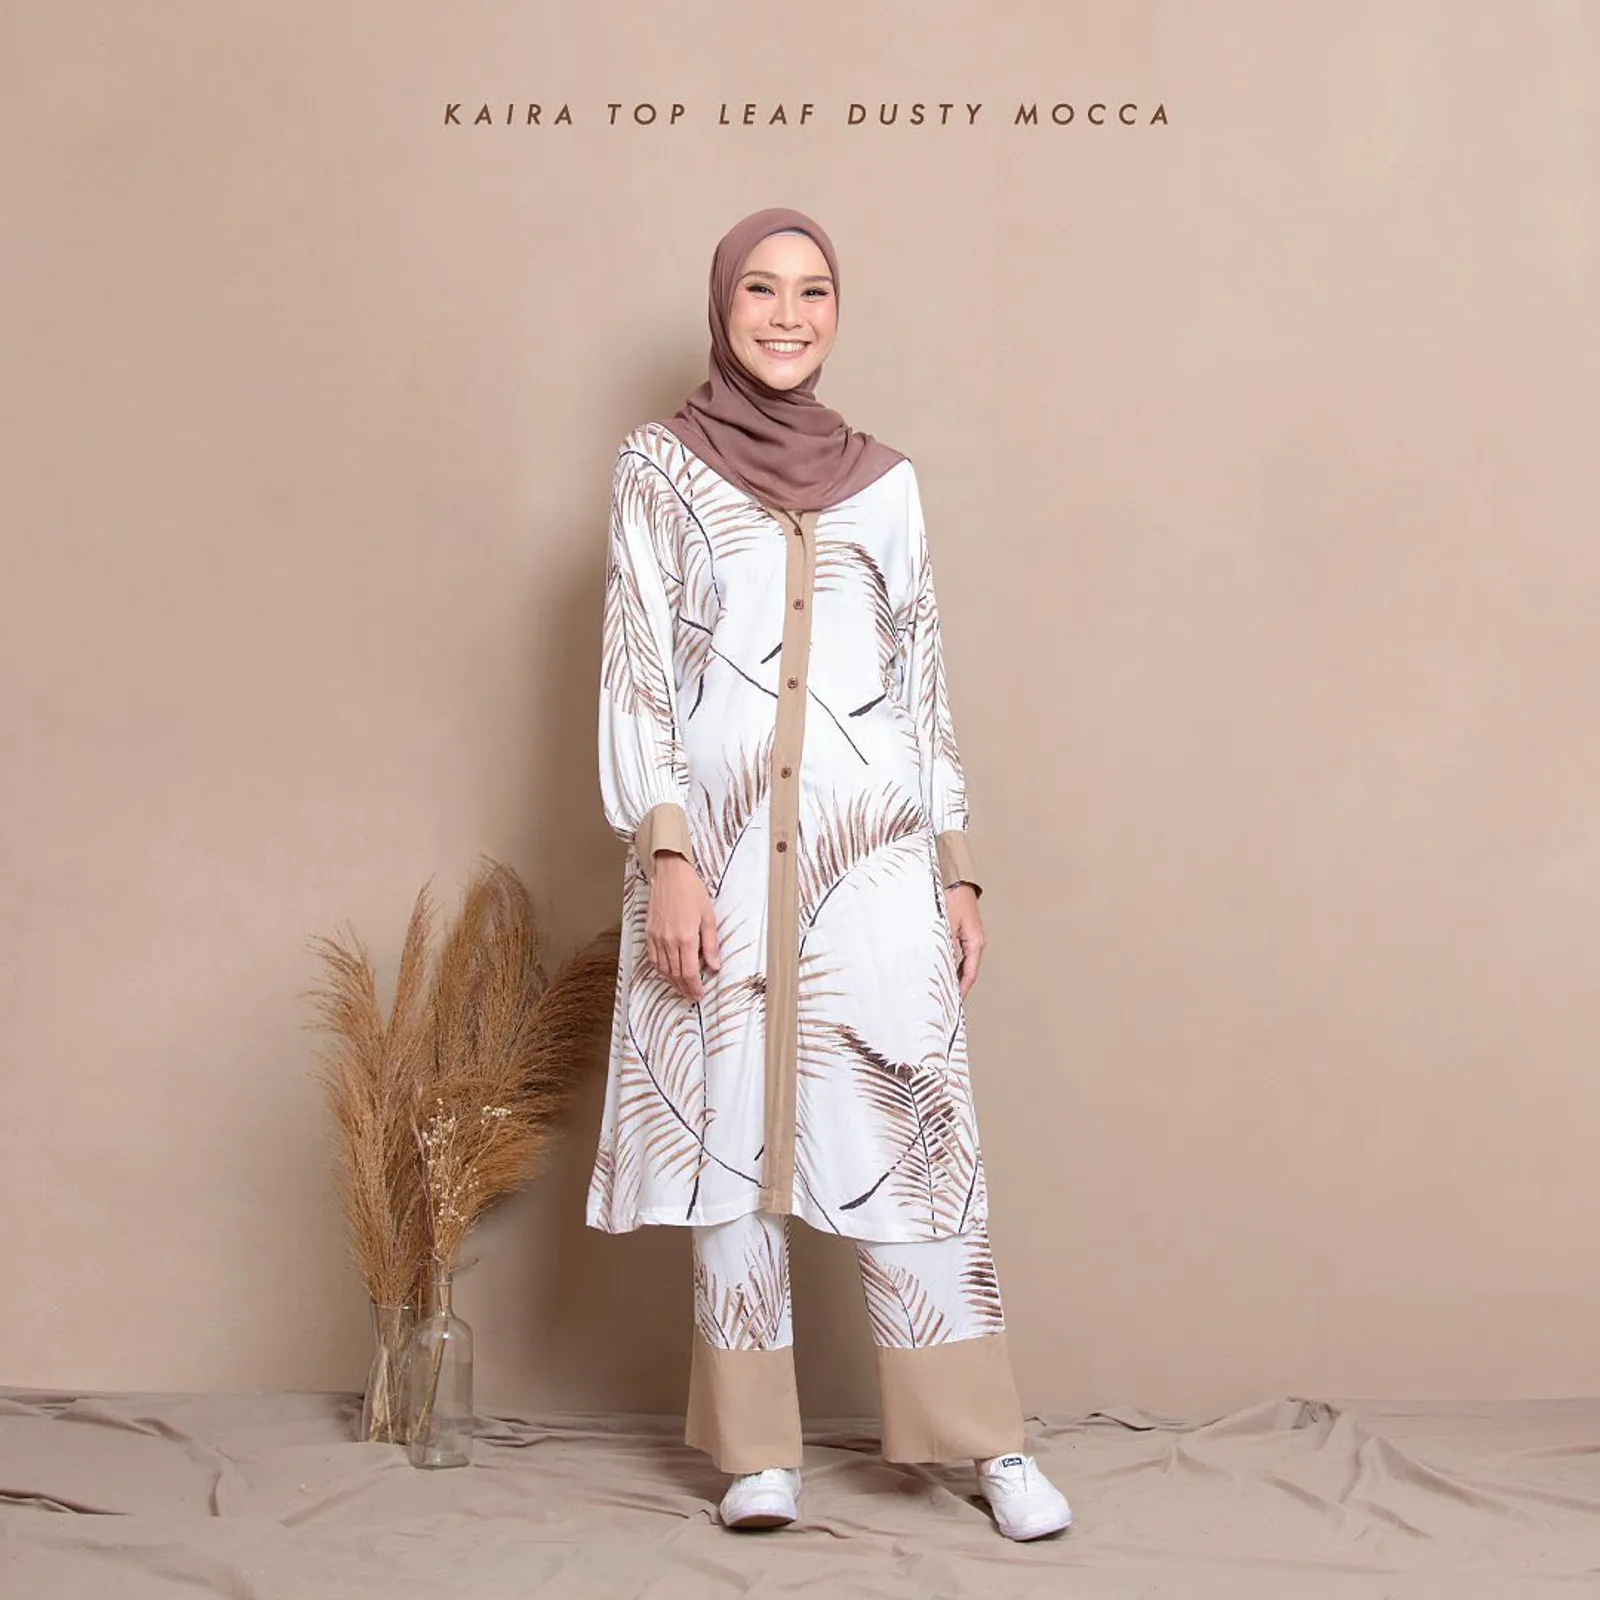 Deretan Artis Indonesia yang Memiliki Brand Fashion Hijab